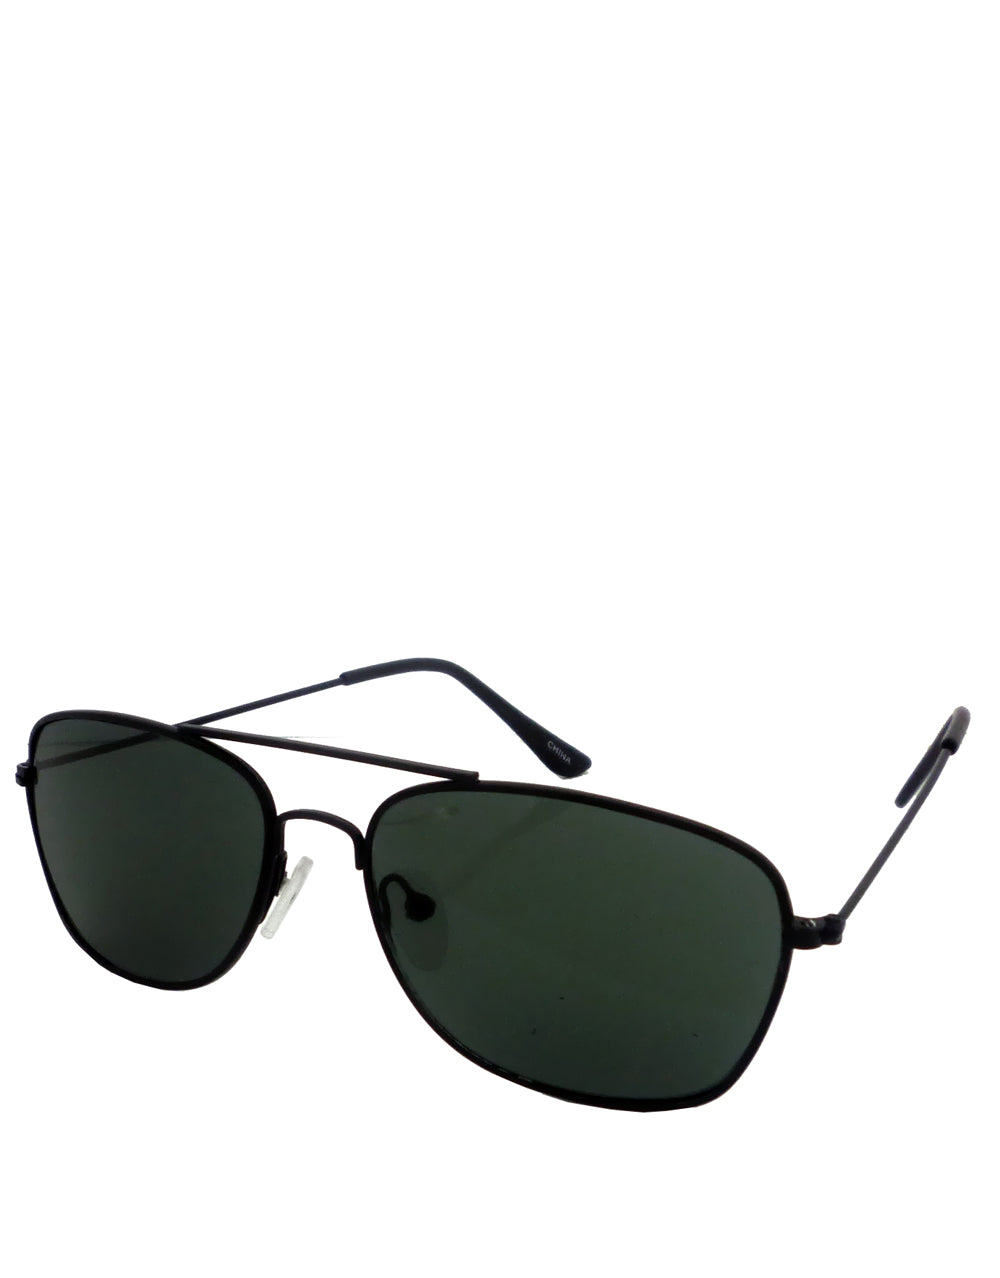 Soprano Style Miltary Sunglasses, Black Frame / Smoke Lens